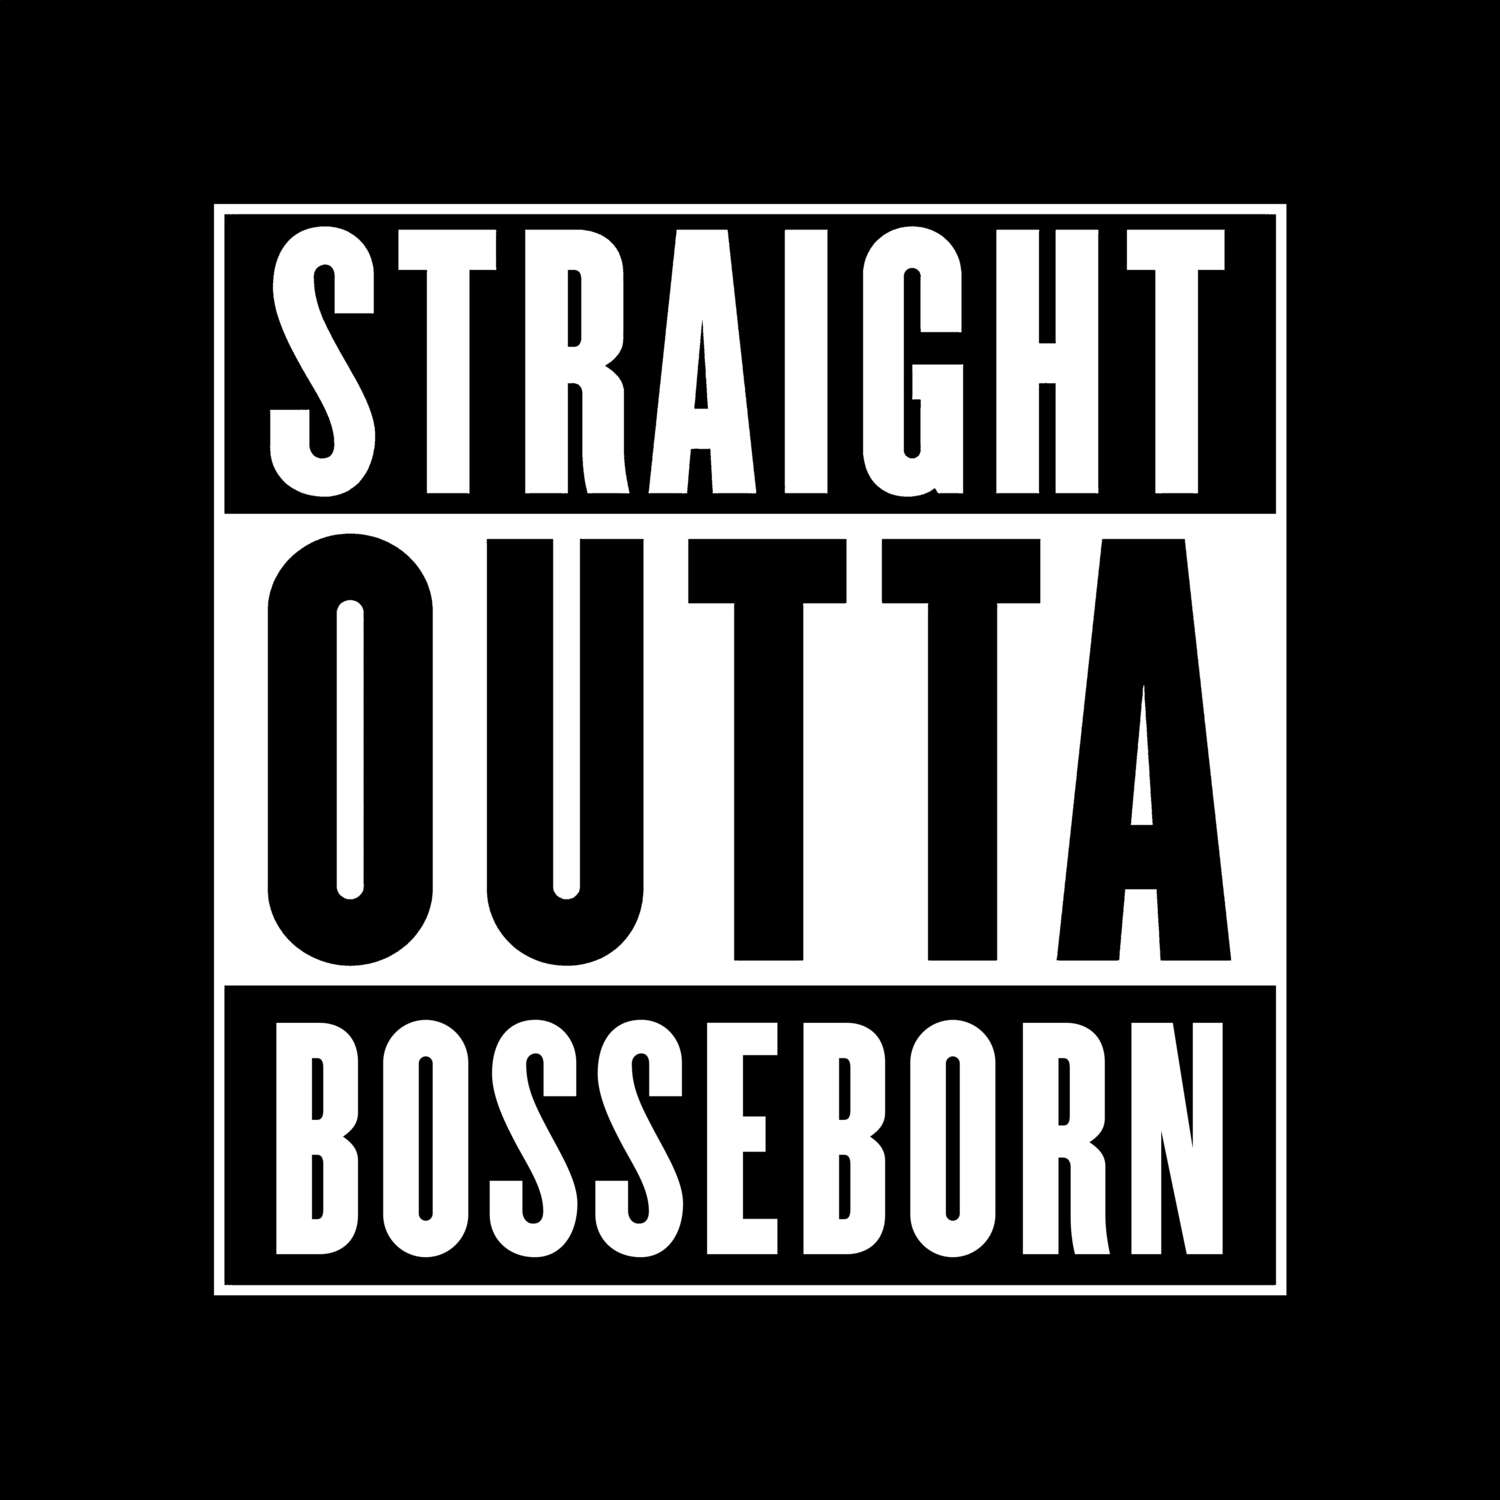 Bosseborn T-Shirt »Straight Outta«